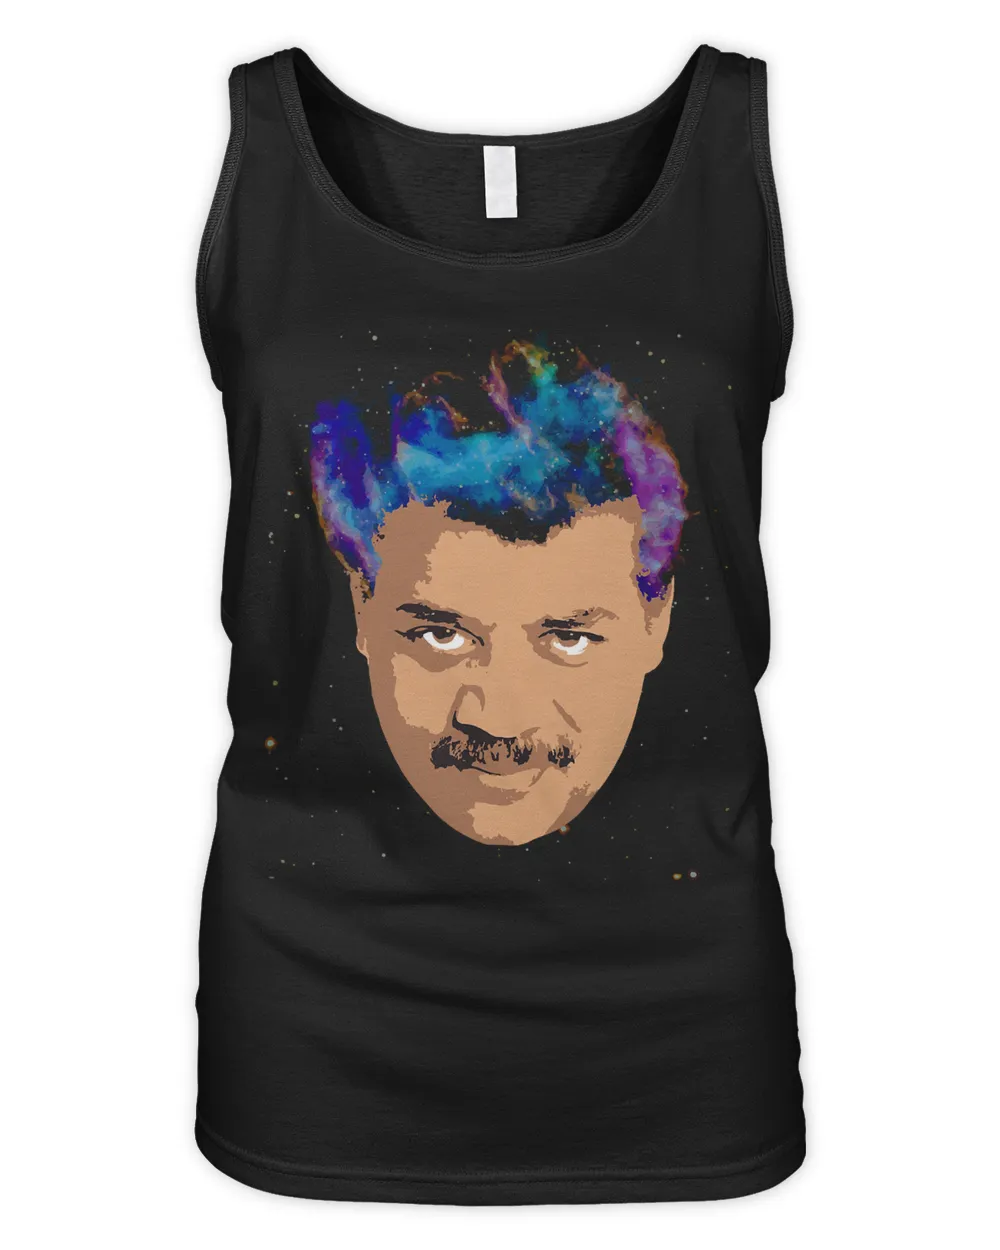 Neil deGrasse Tyson Space Head t-shirt